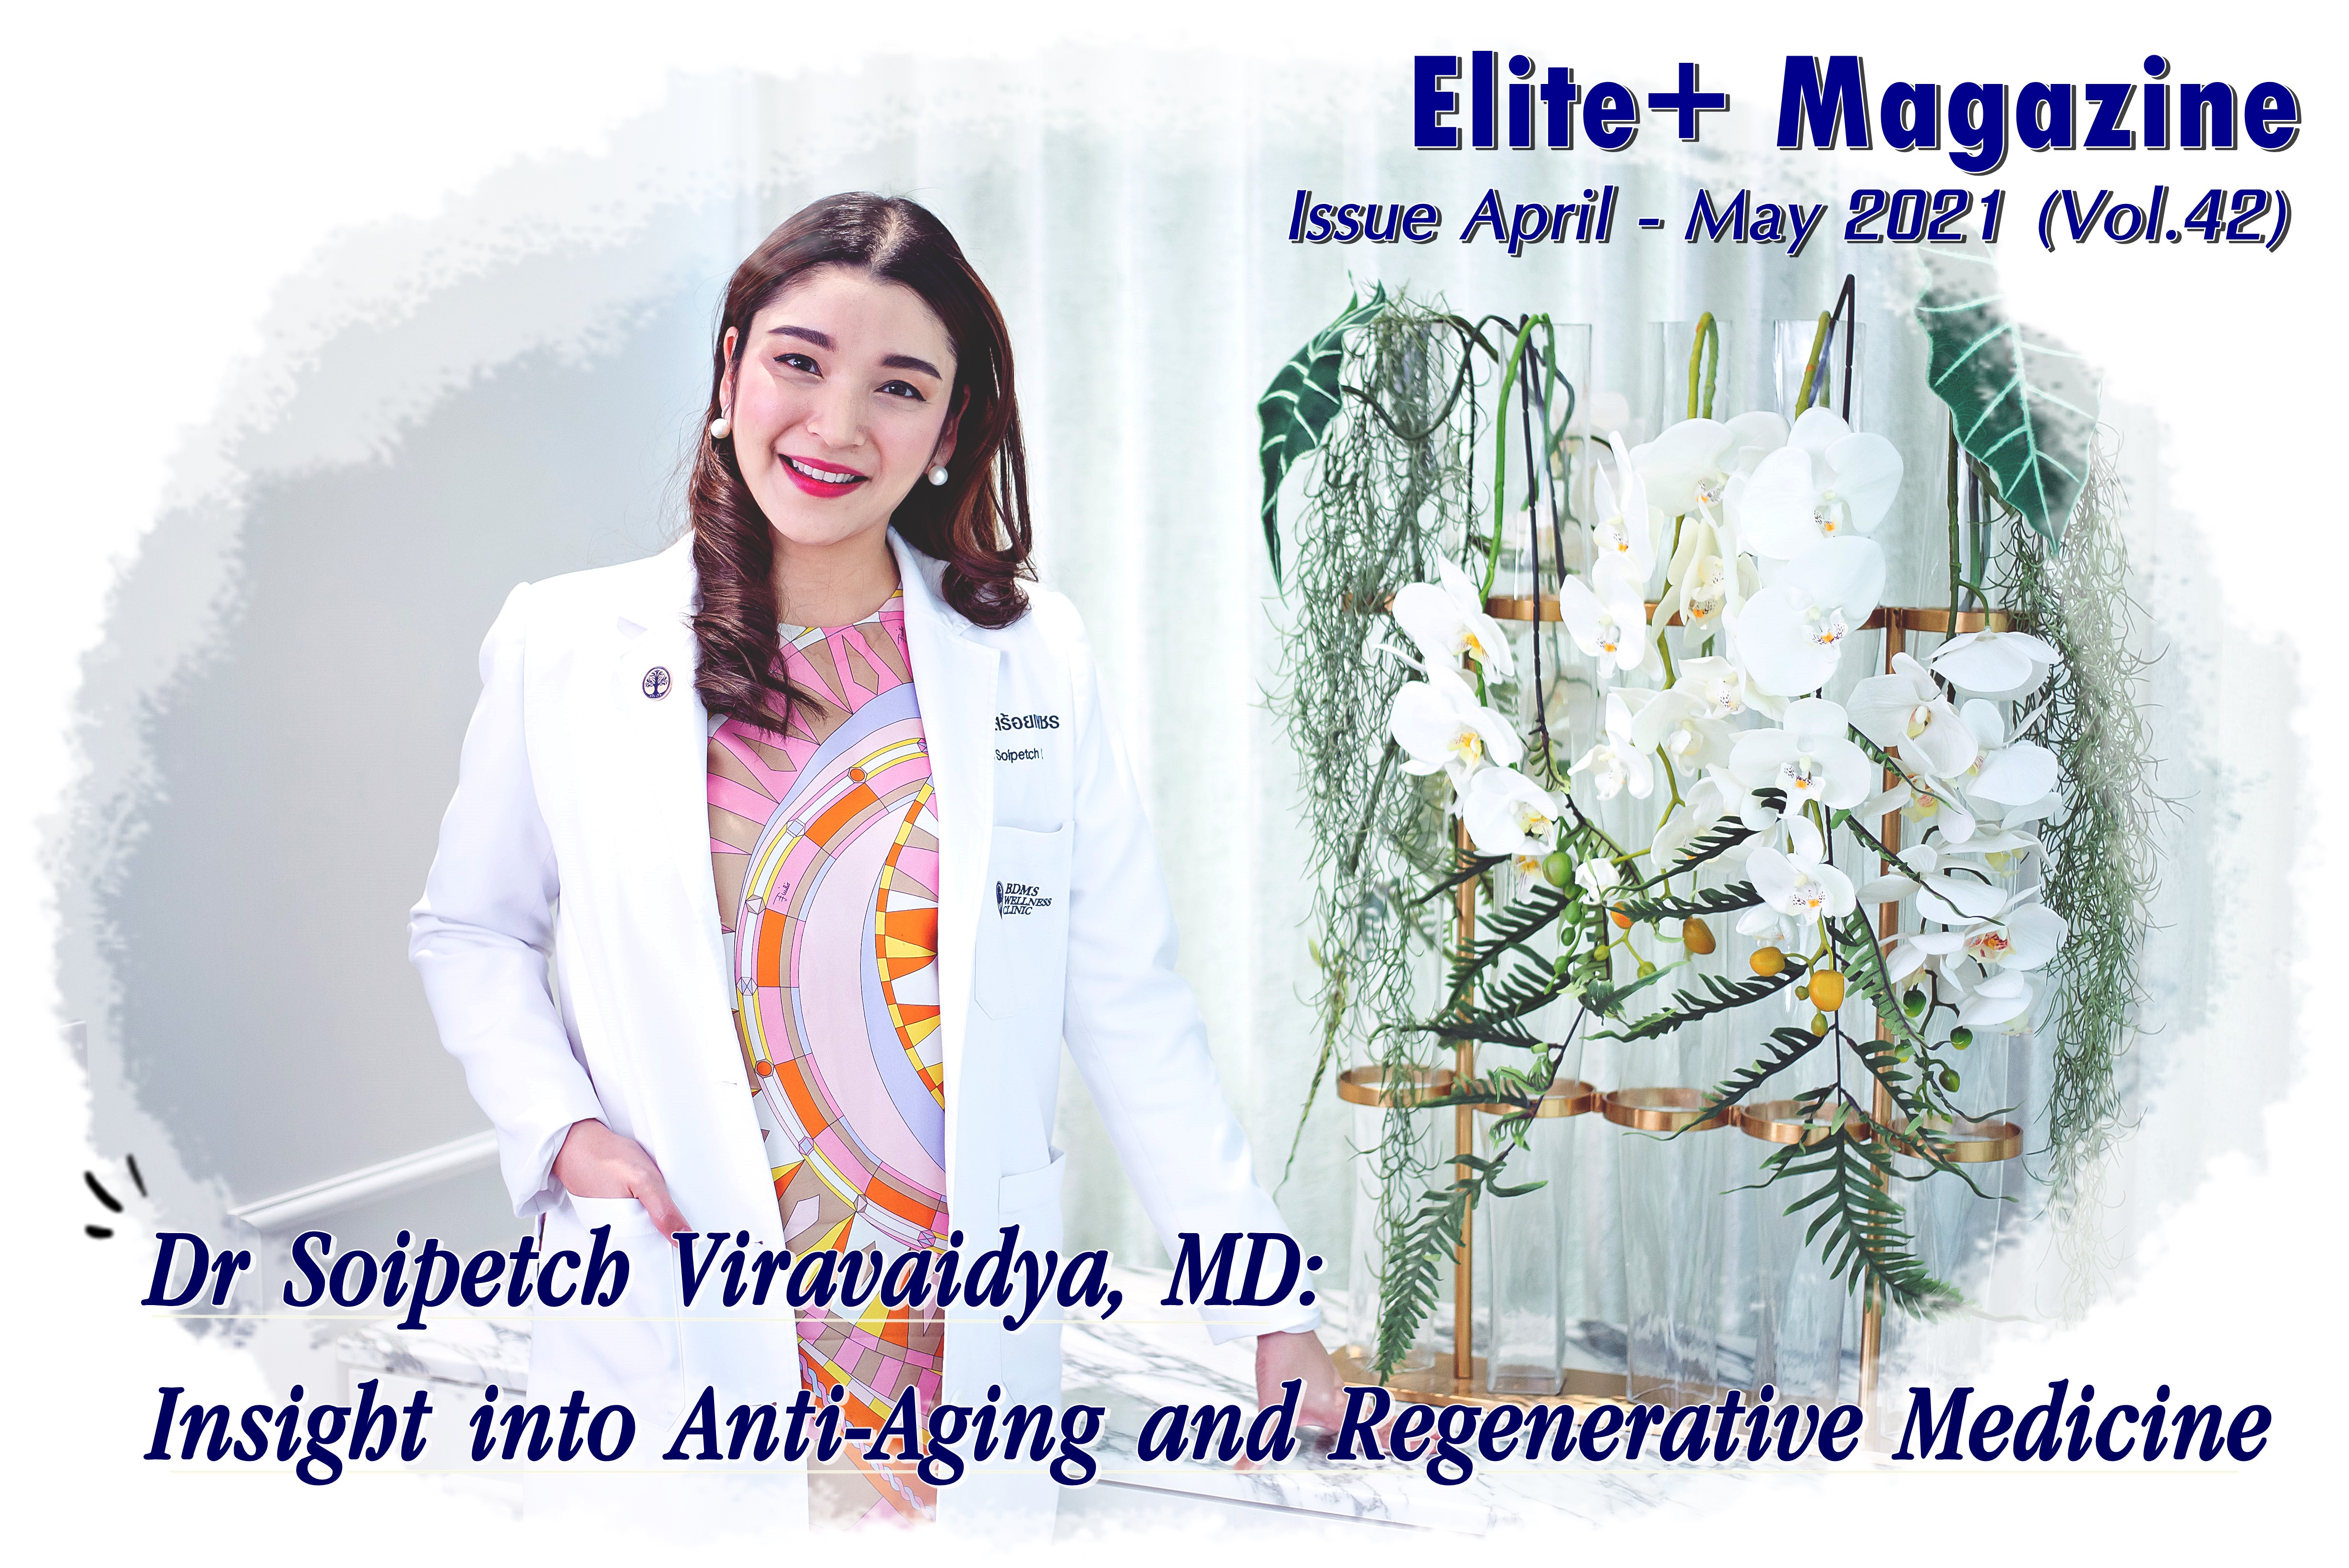 Dr Soipetch Viravaidya, MD: Insight into Anti-Aging and Regenerative Medicine